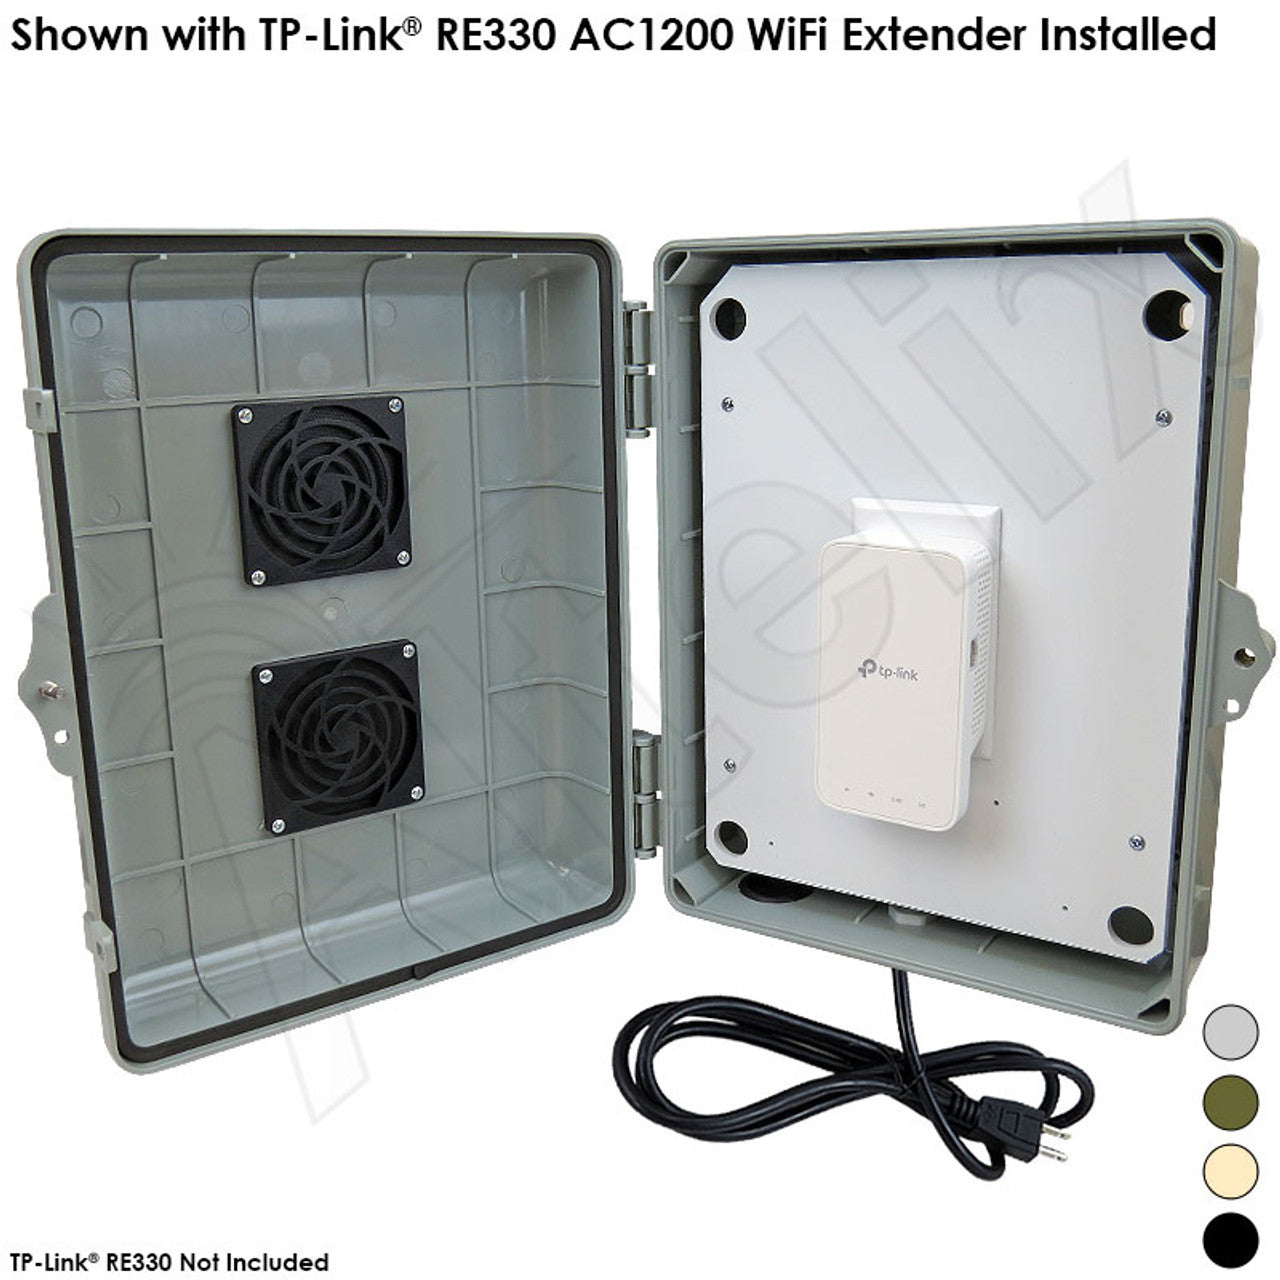 Altelix Weatherproof Vented WiFi Enclosure for TP-Link¬Æ RE330 AC1200 WiFi Extender